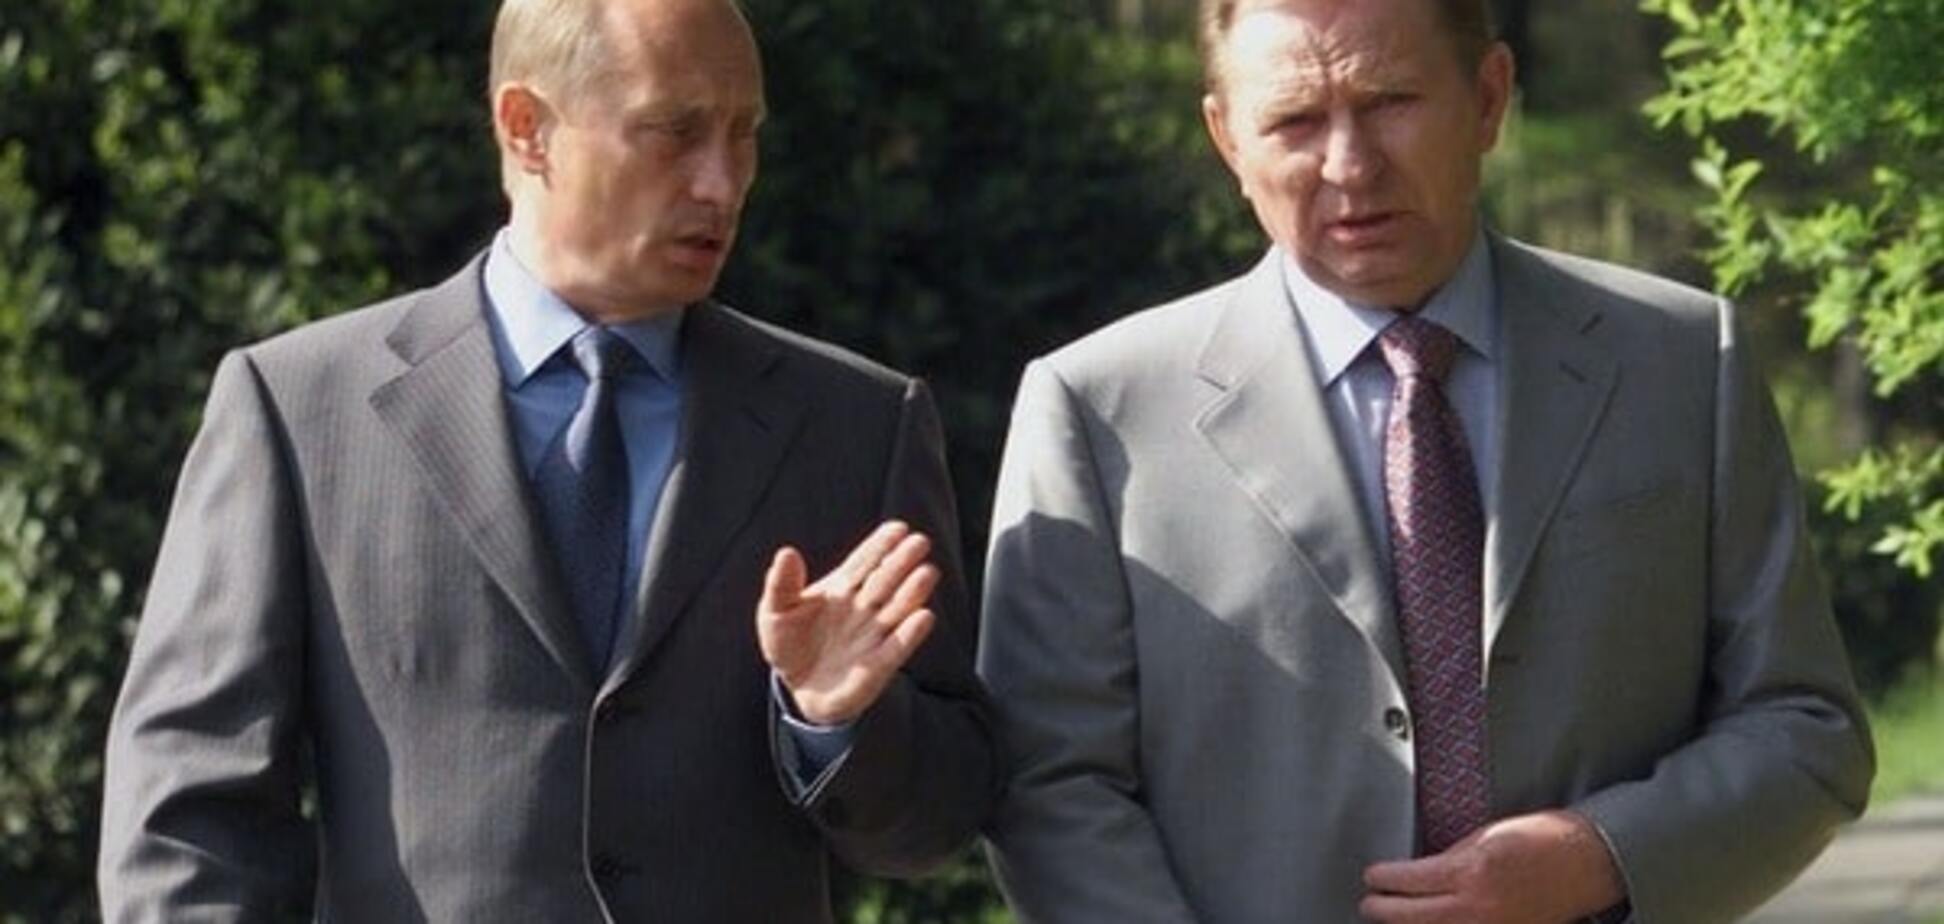 Владимир Путин и Леонид Кучма